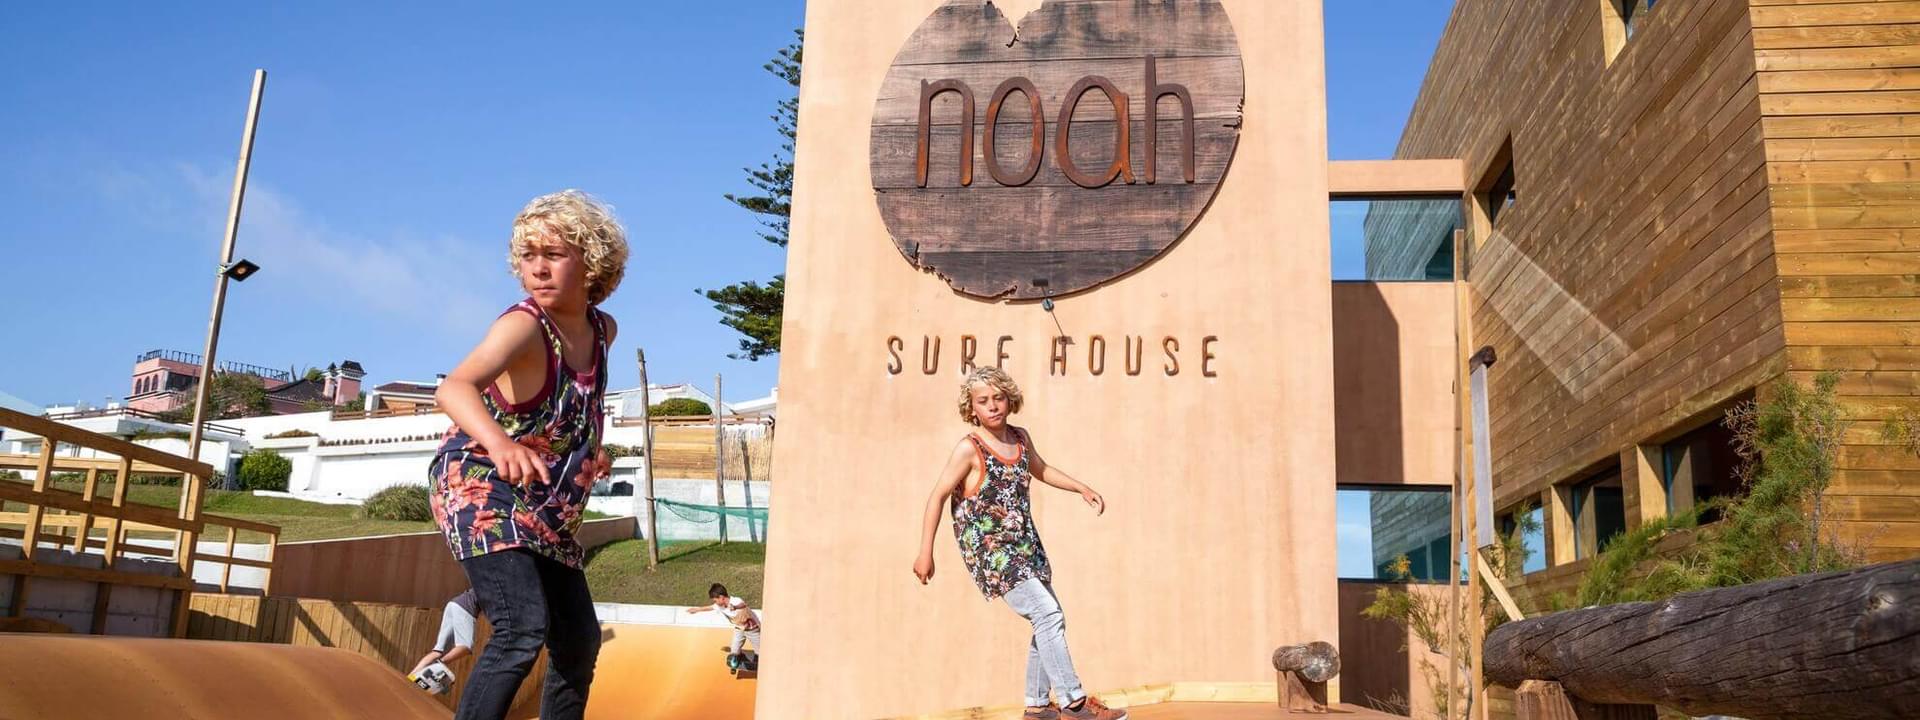 Noah Surf House